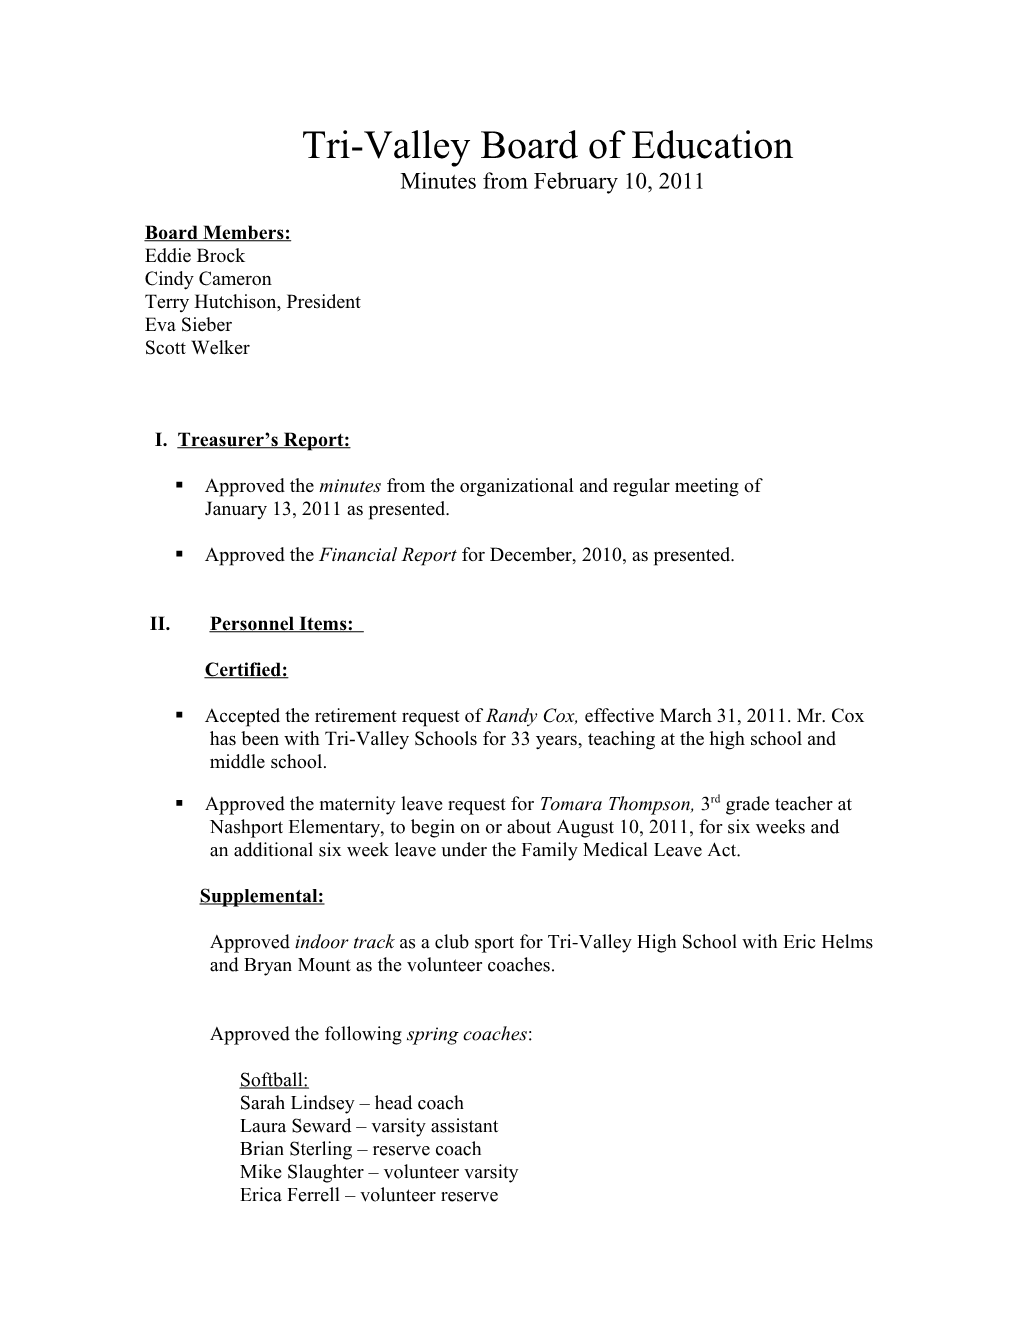 Tri-Valley Board of Education Agenda February 10, 2011